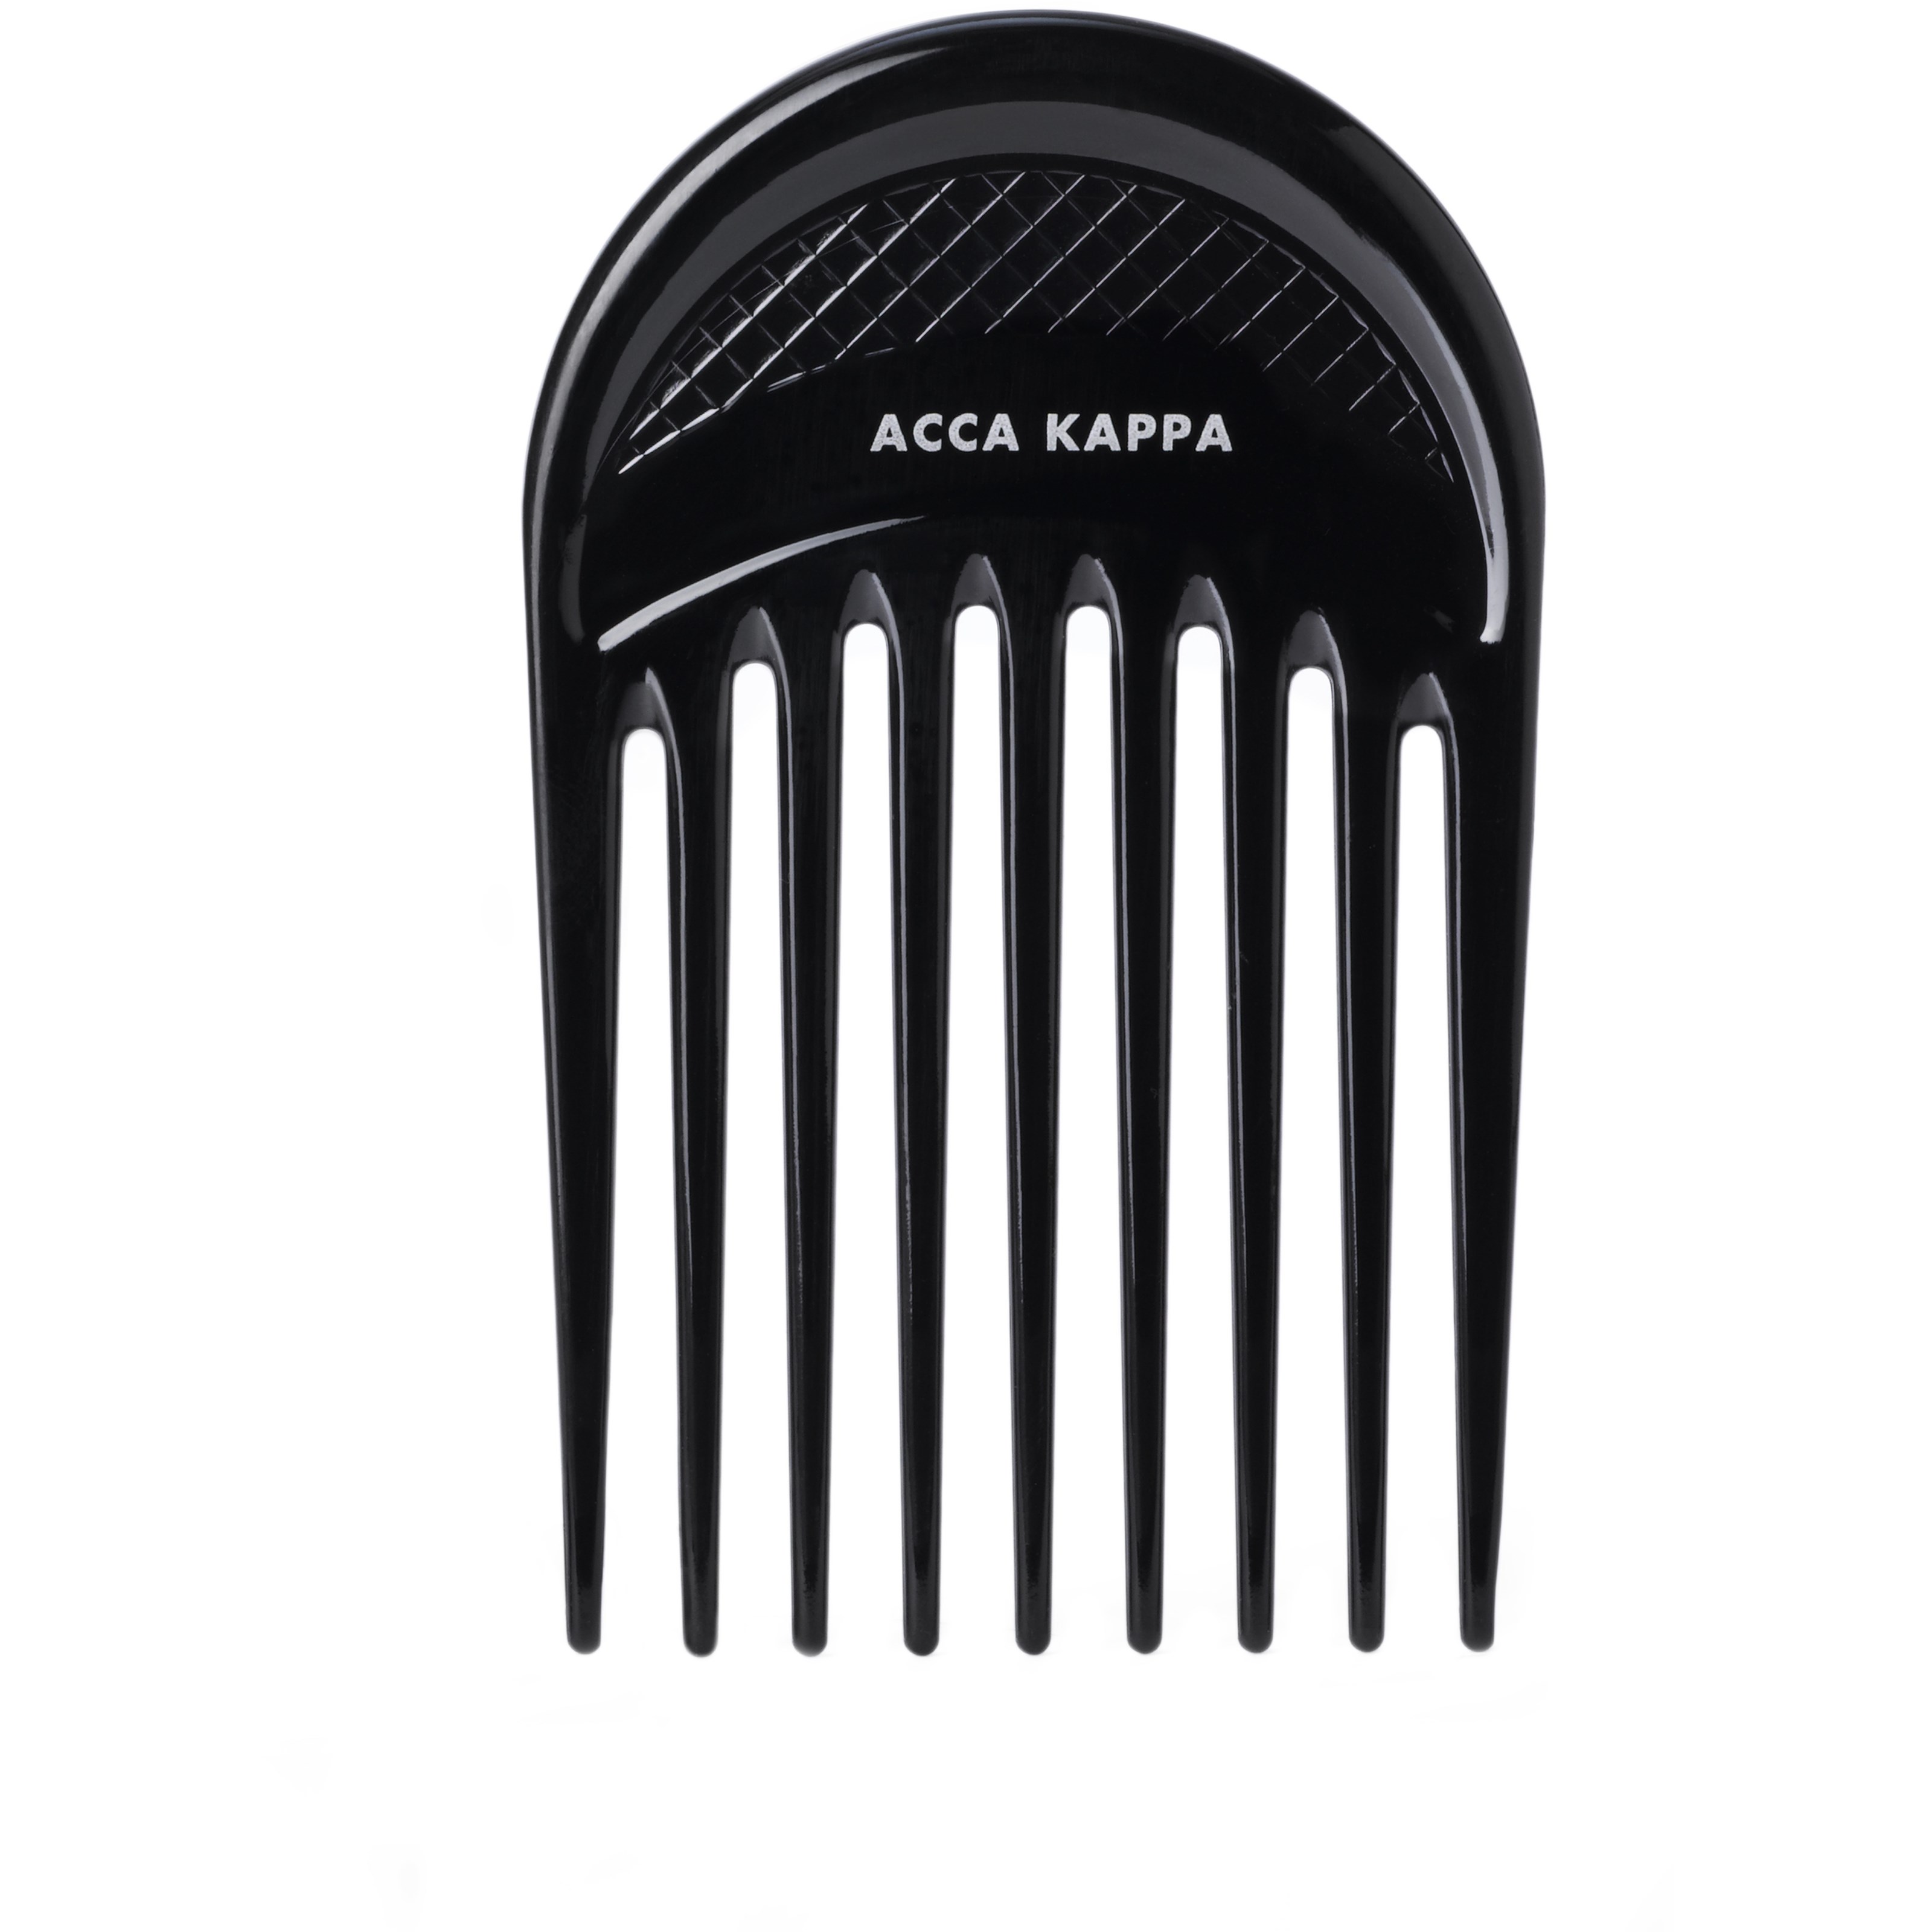 Bilde av Acca Kappa Professional Round Afro Comb Styler – 7626 Black